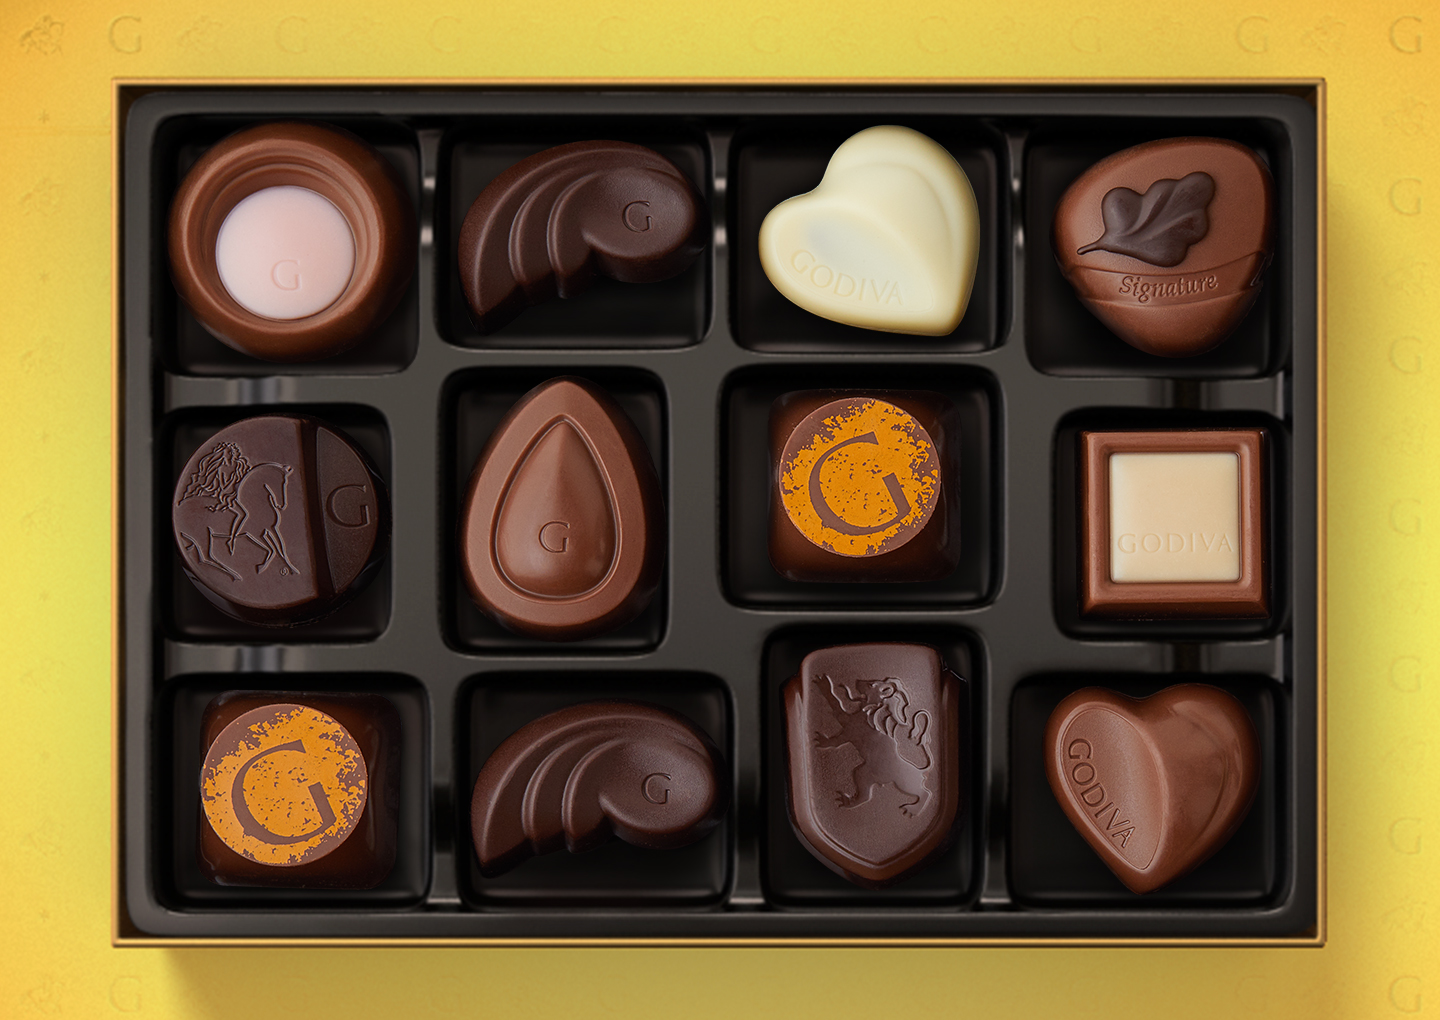 Godiva Gold large box interior chocolates retouched composite